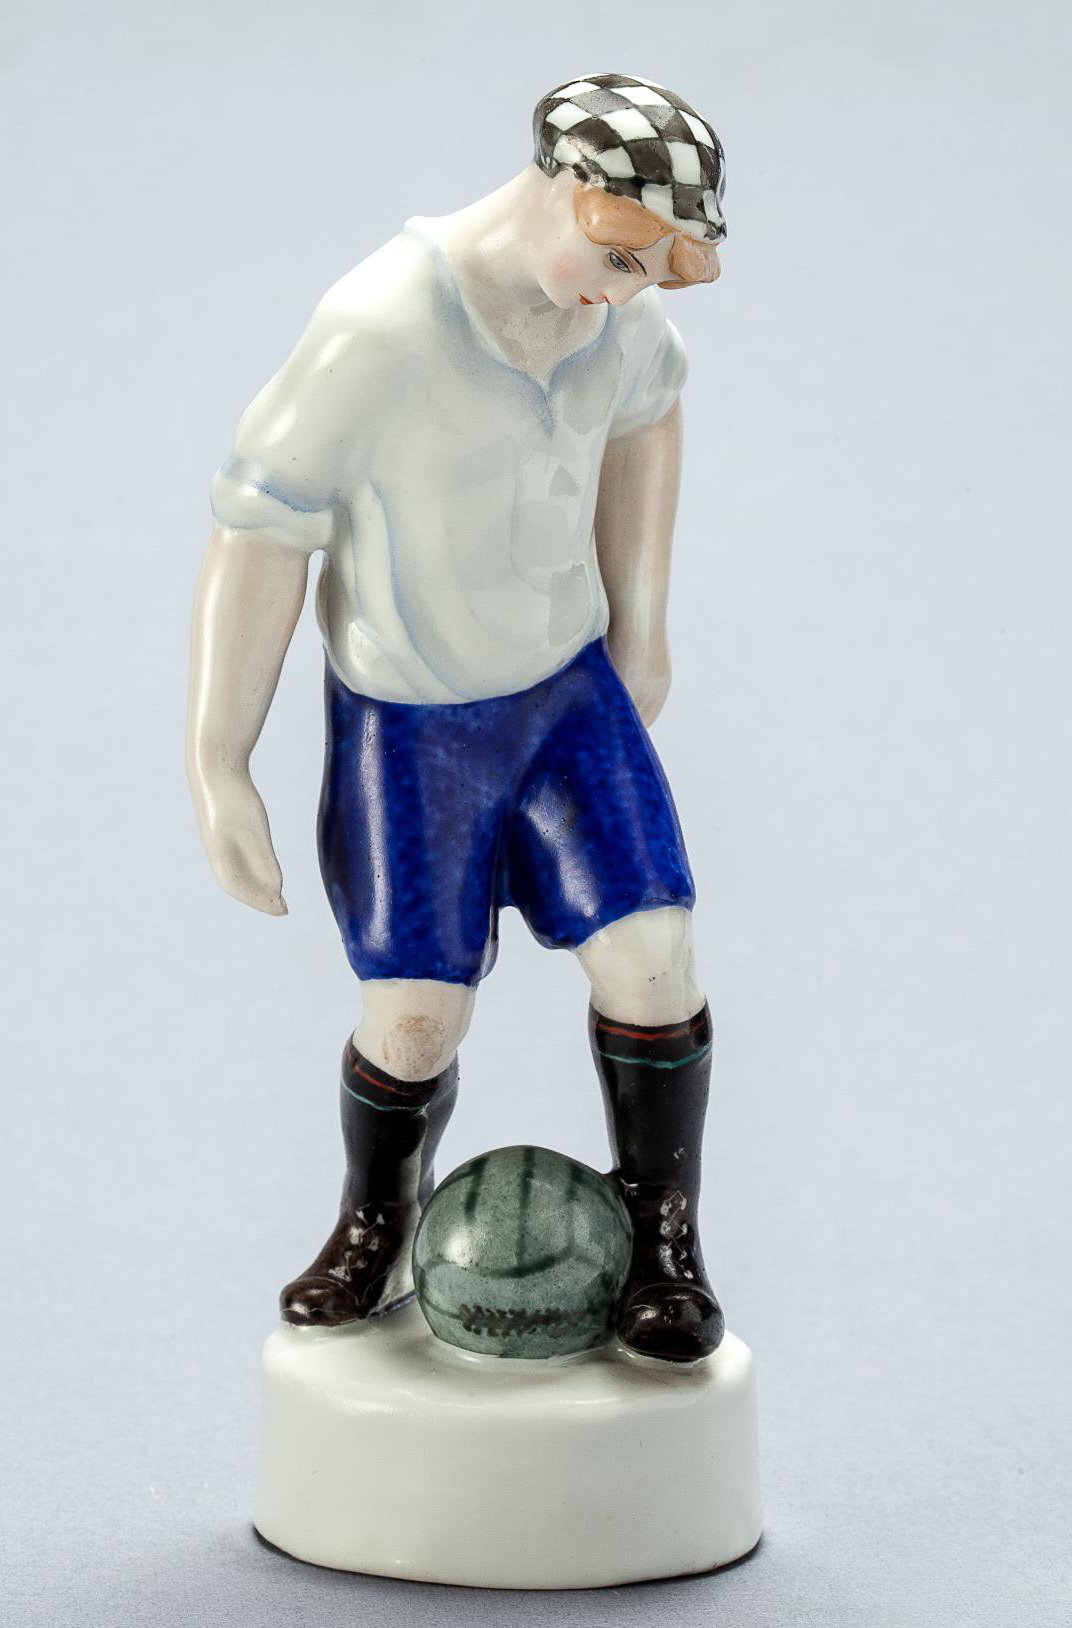 Soviet propaganda porcelain figure of Soccer Player by Danko